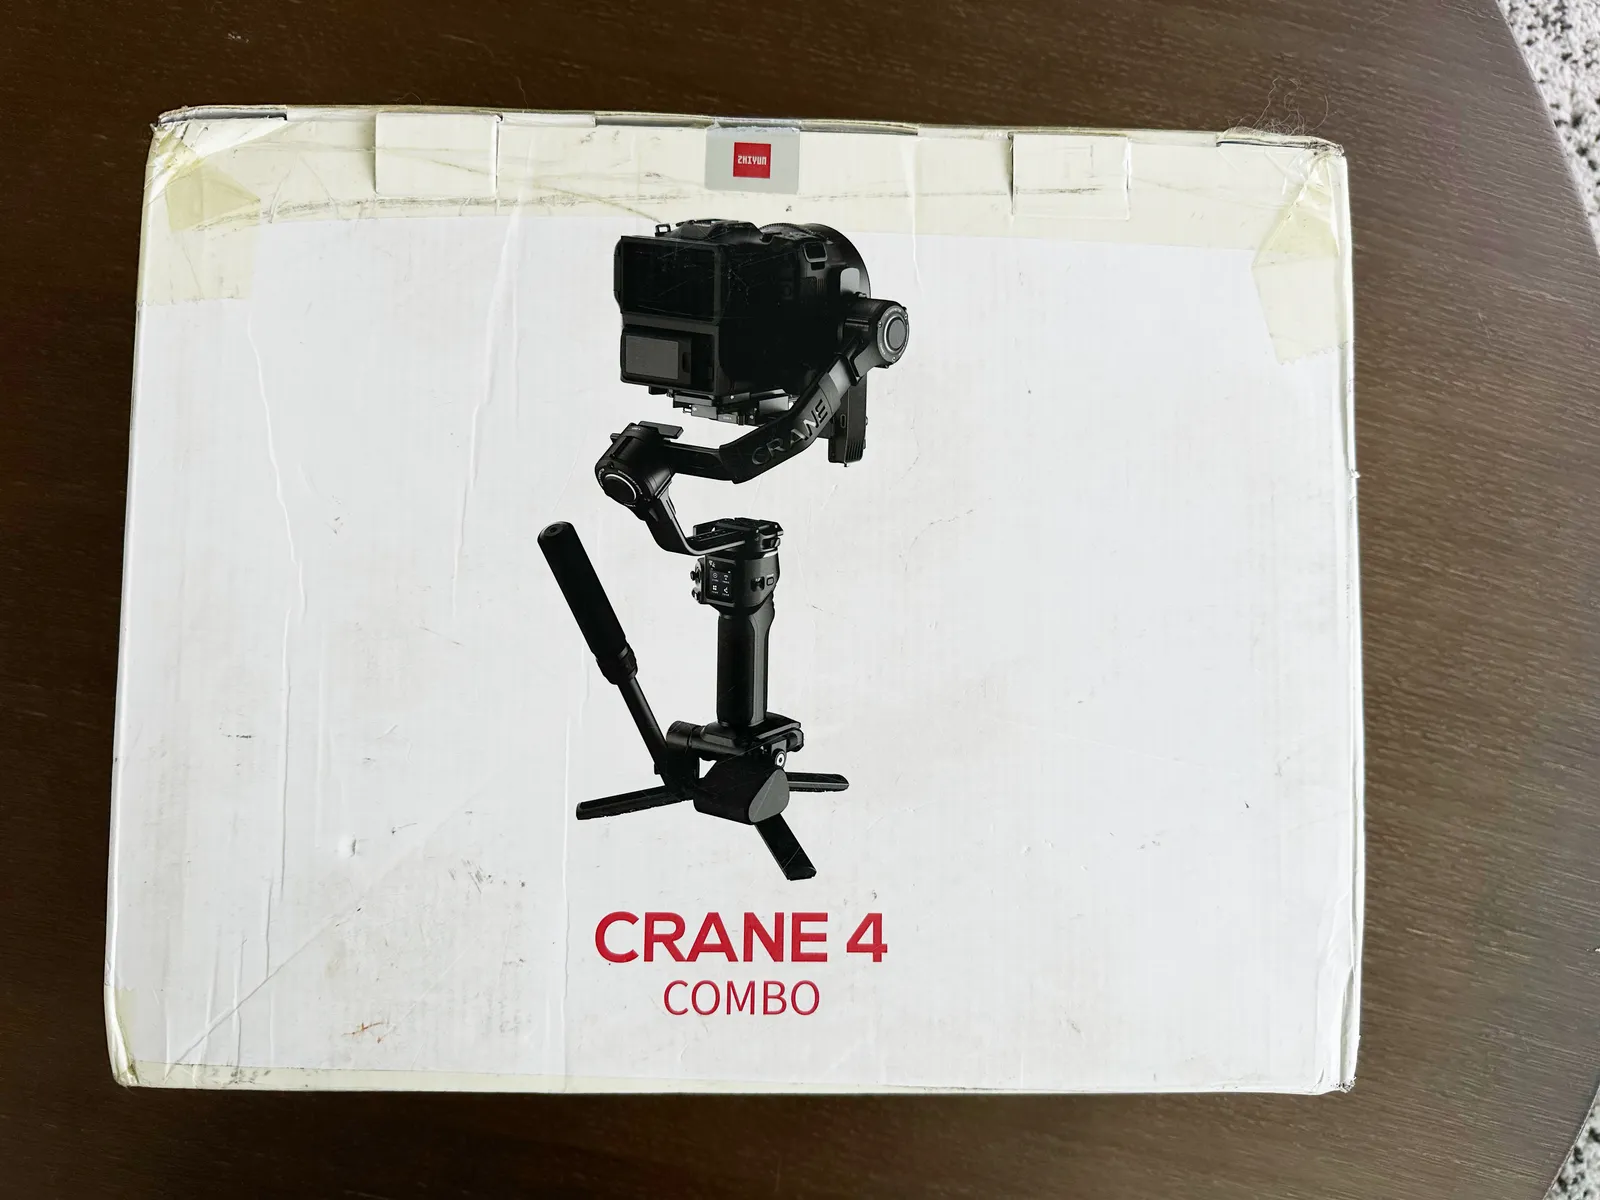 Zhiyun Crane 4 Gimbal Combo From Lee Zavitz's Gear Shop On Gear Focus